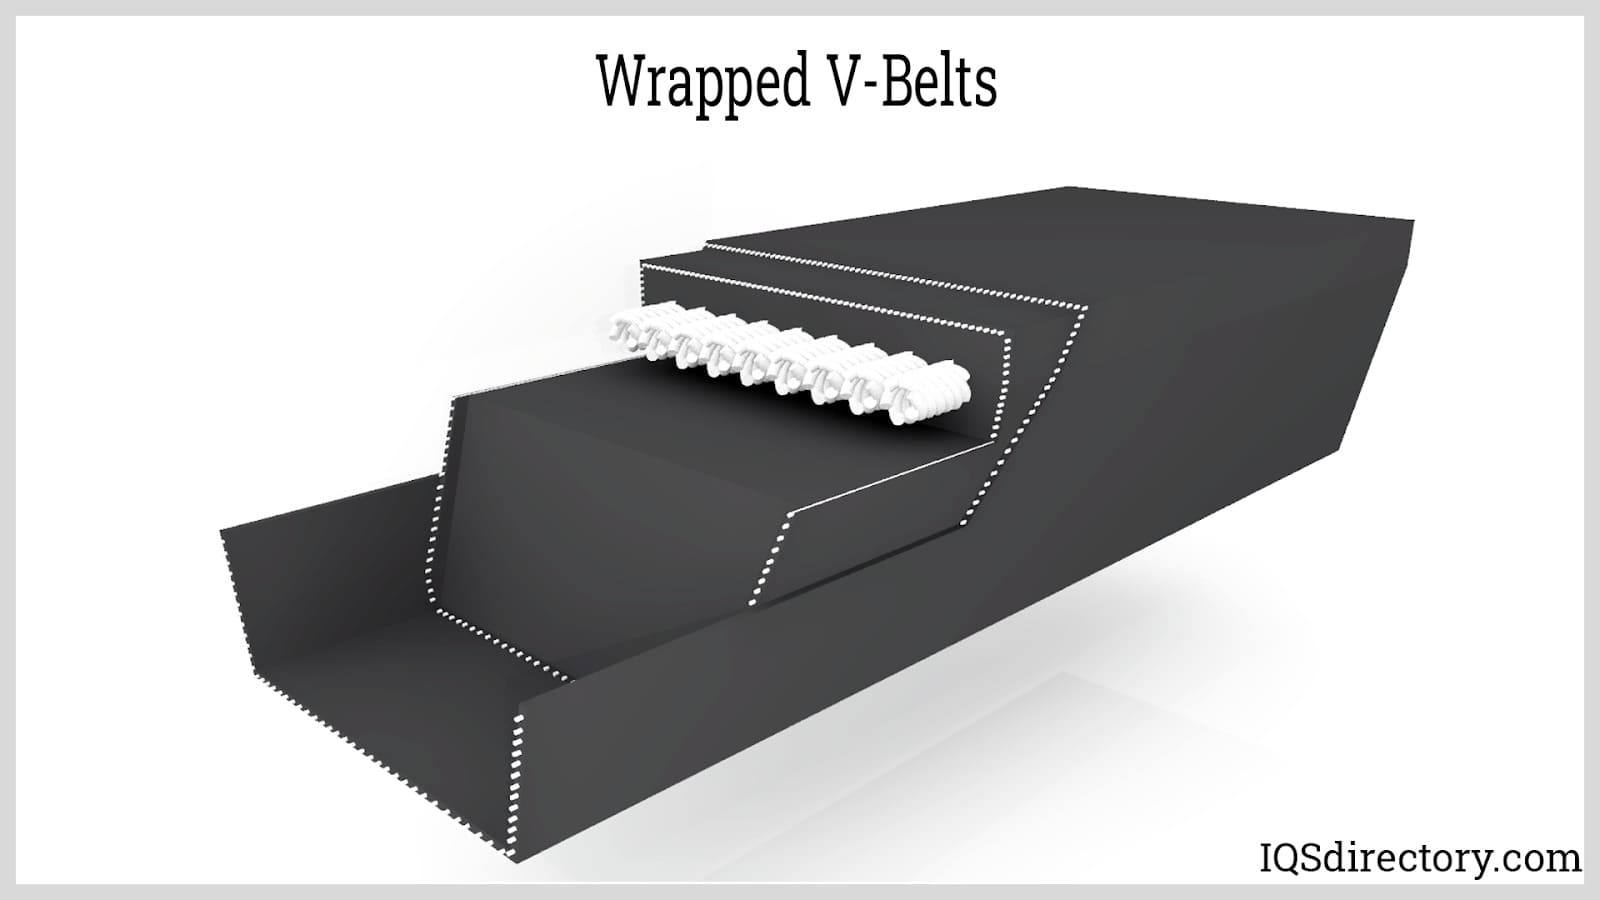 Wrapped V-Belts